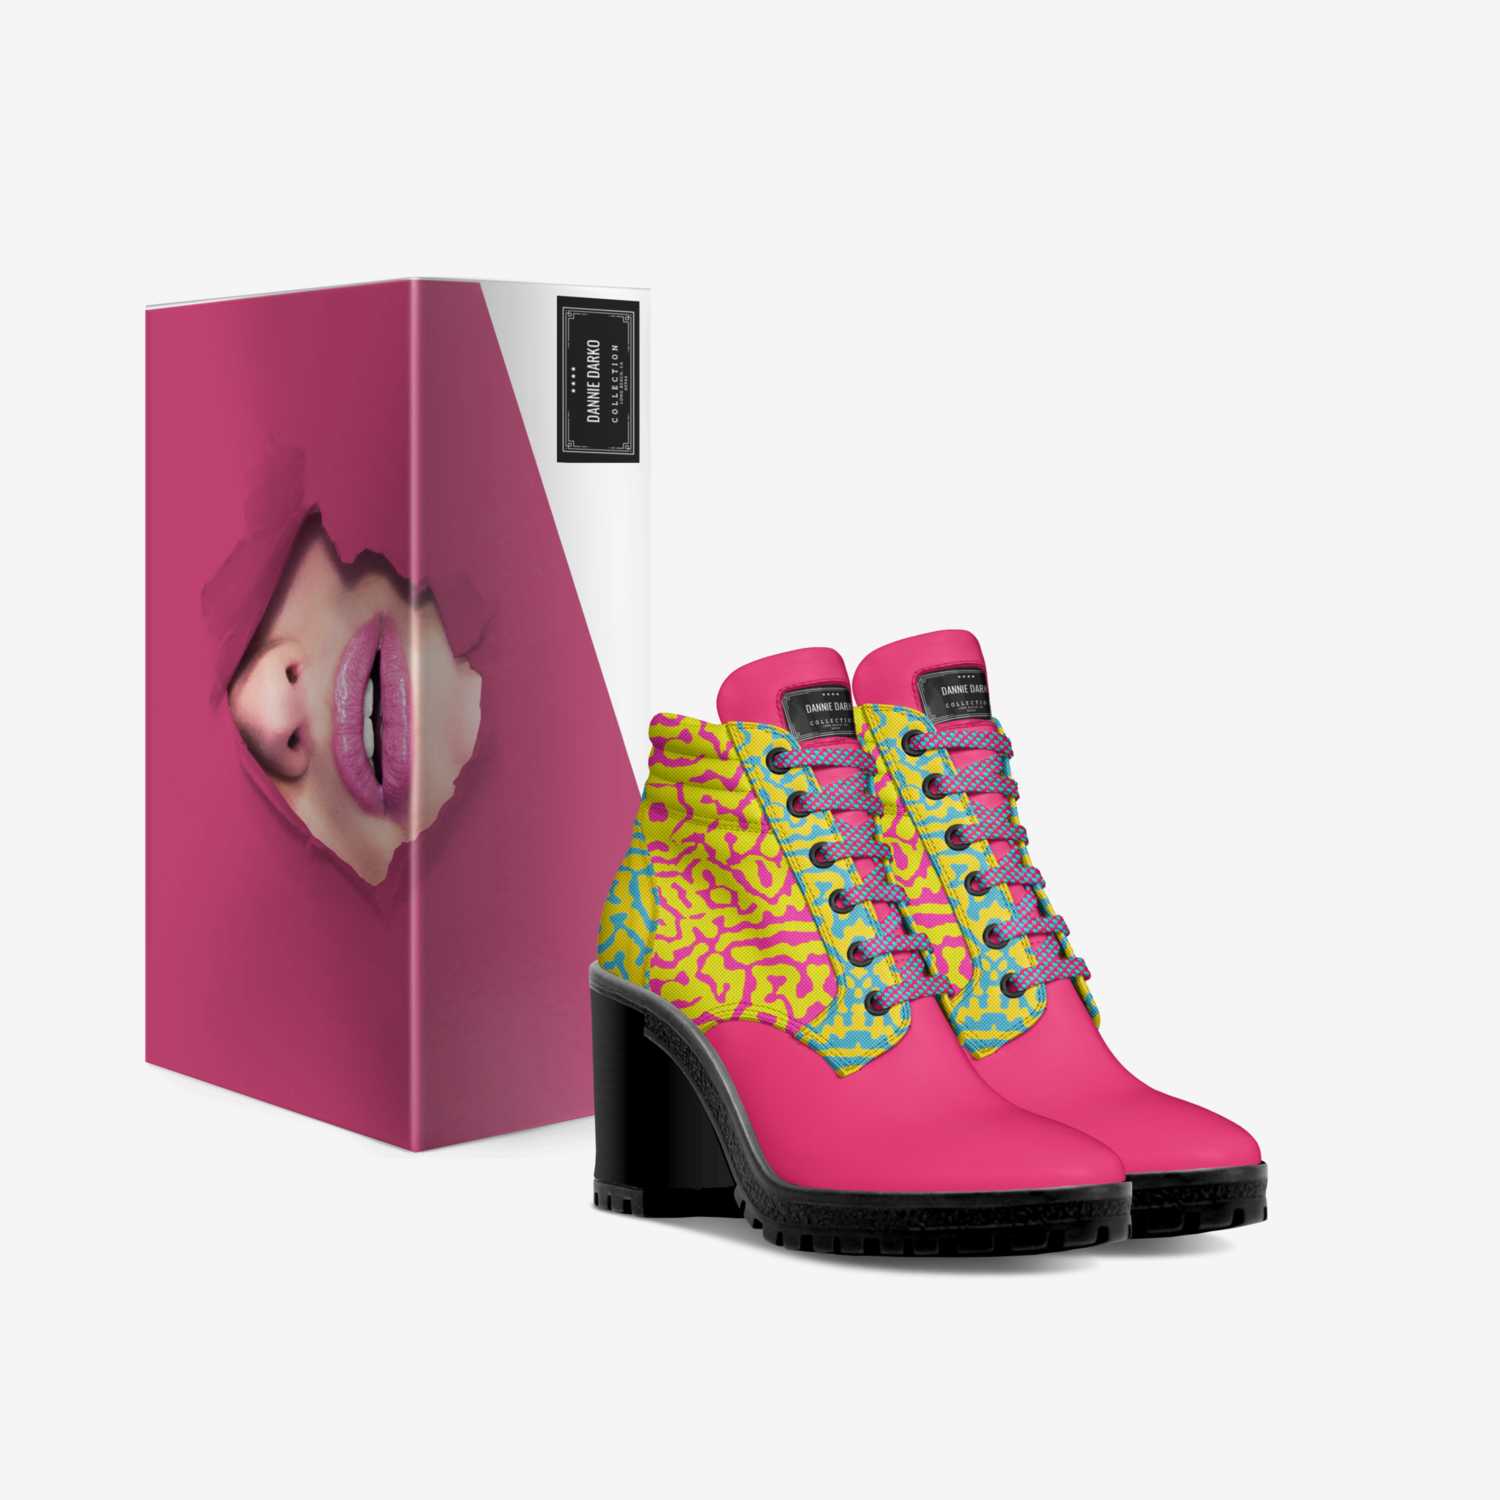 Dannie Darko custom made in Italy shoes by Daniel Landry | Box view